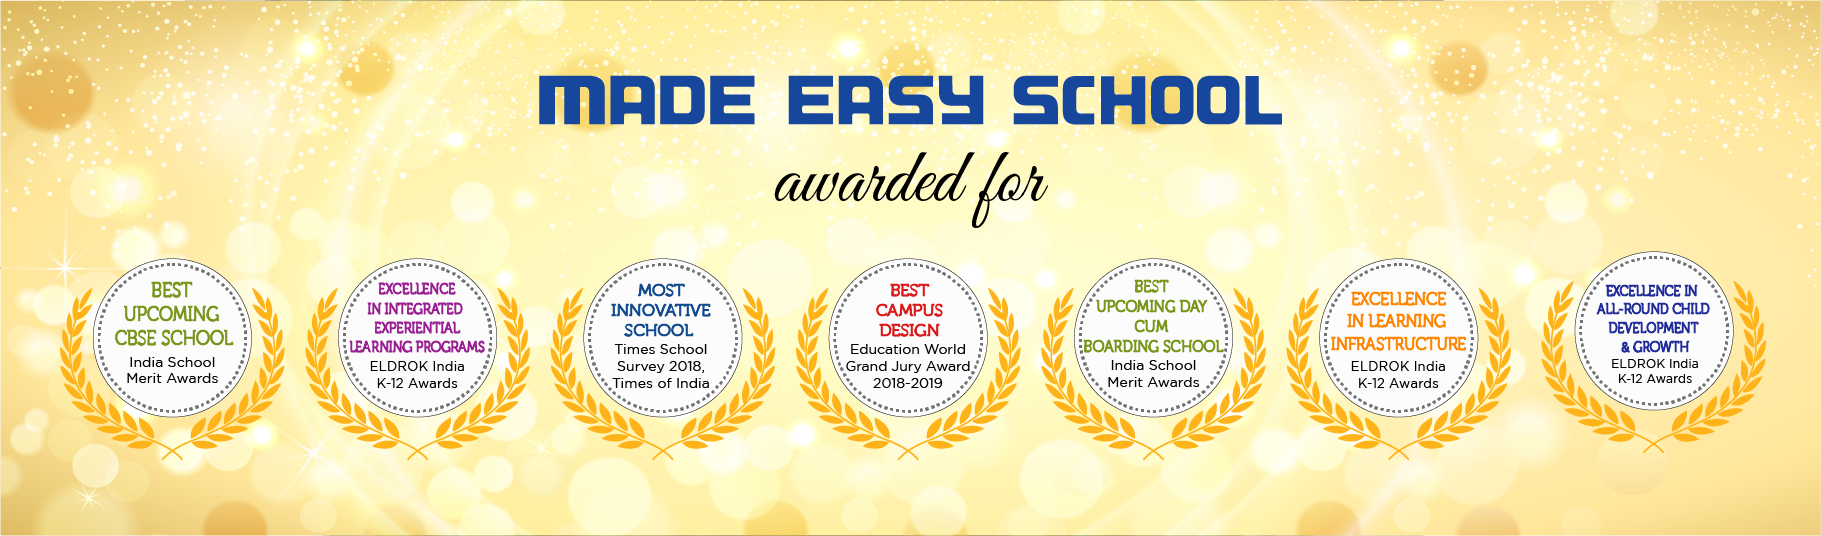 Awards - Made Easy School